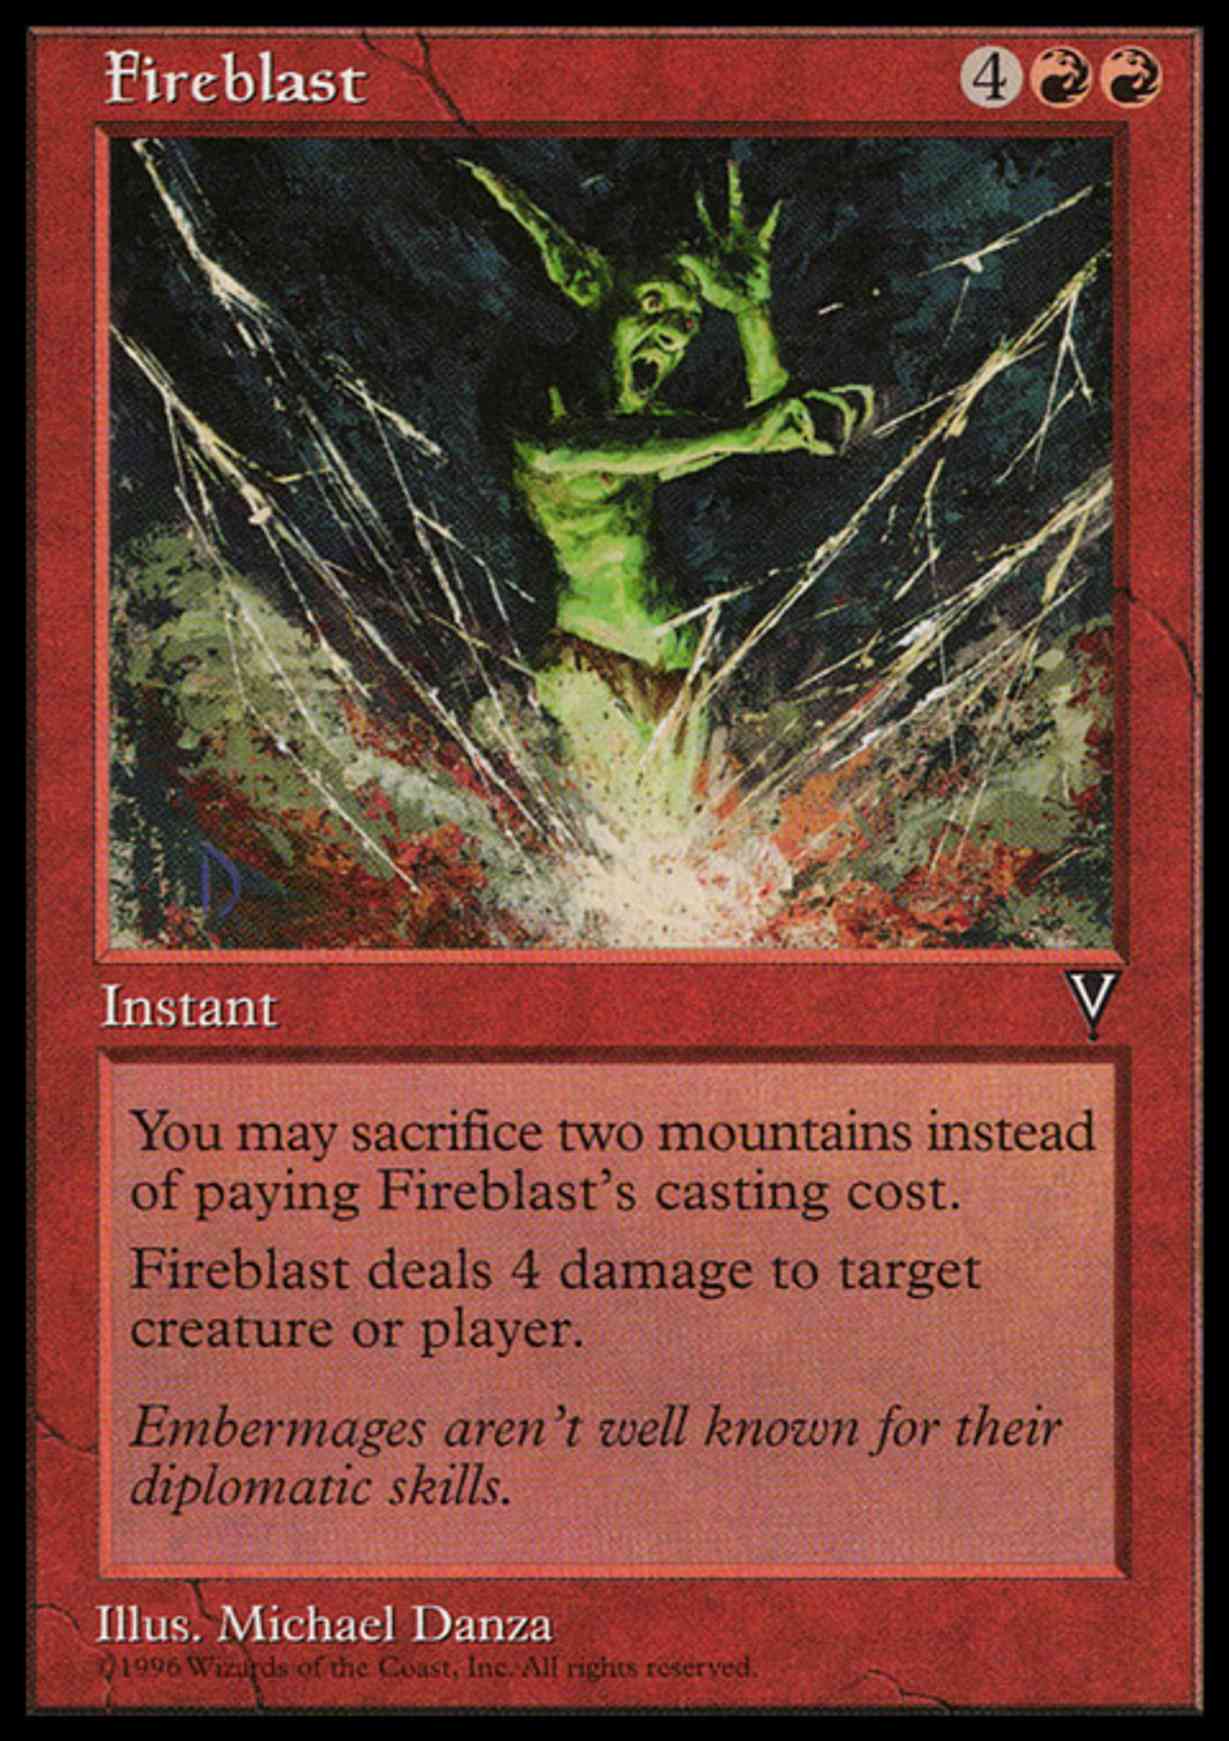 Fireblast magic card front